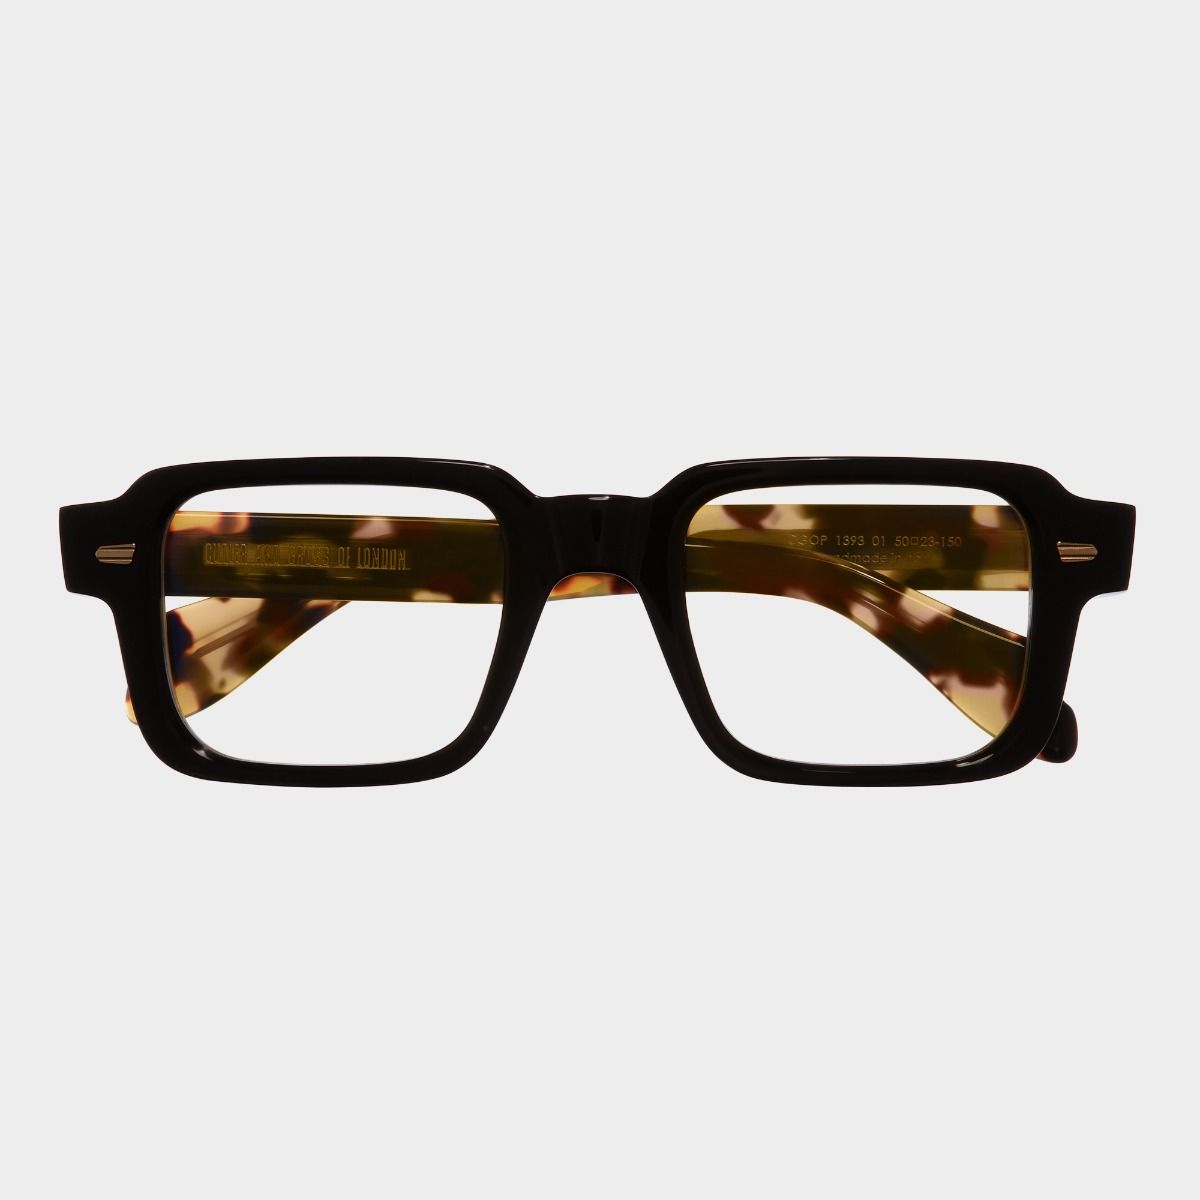 1393 Optical Square Glasses - Black on Camo